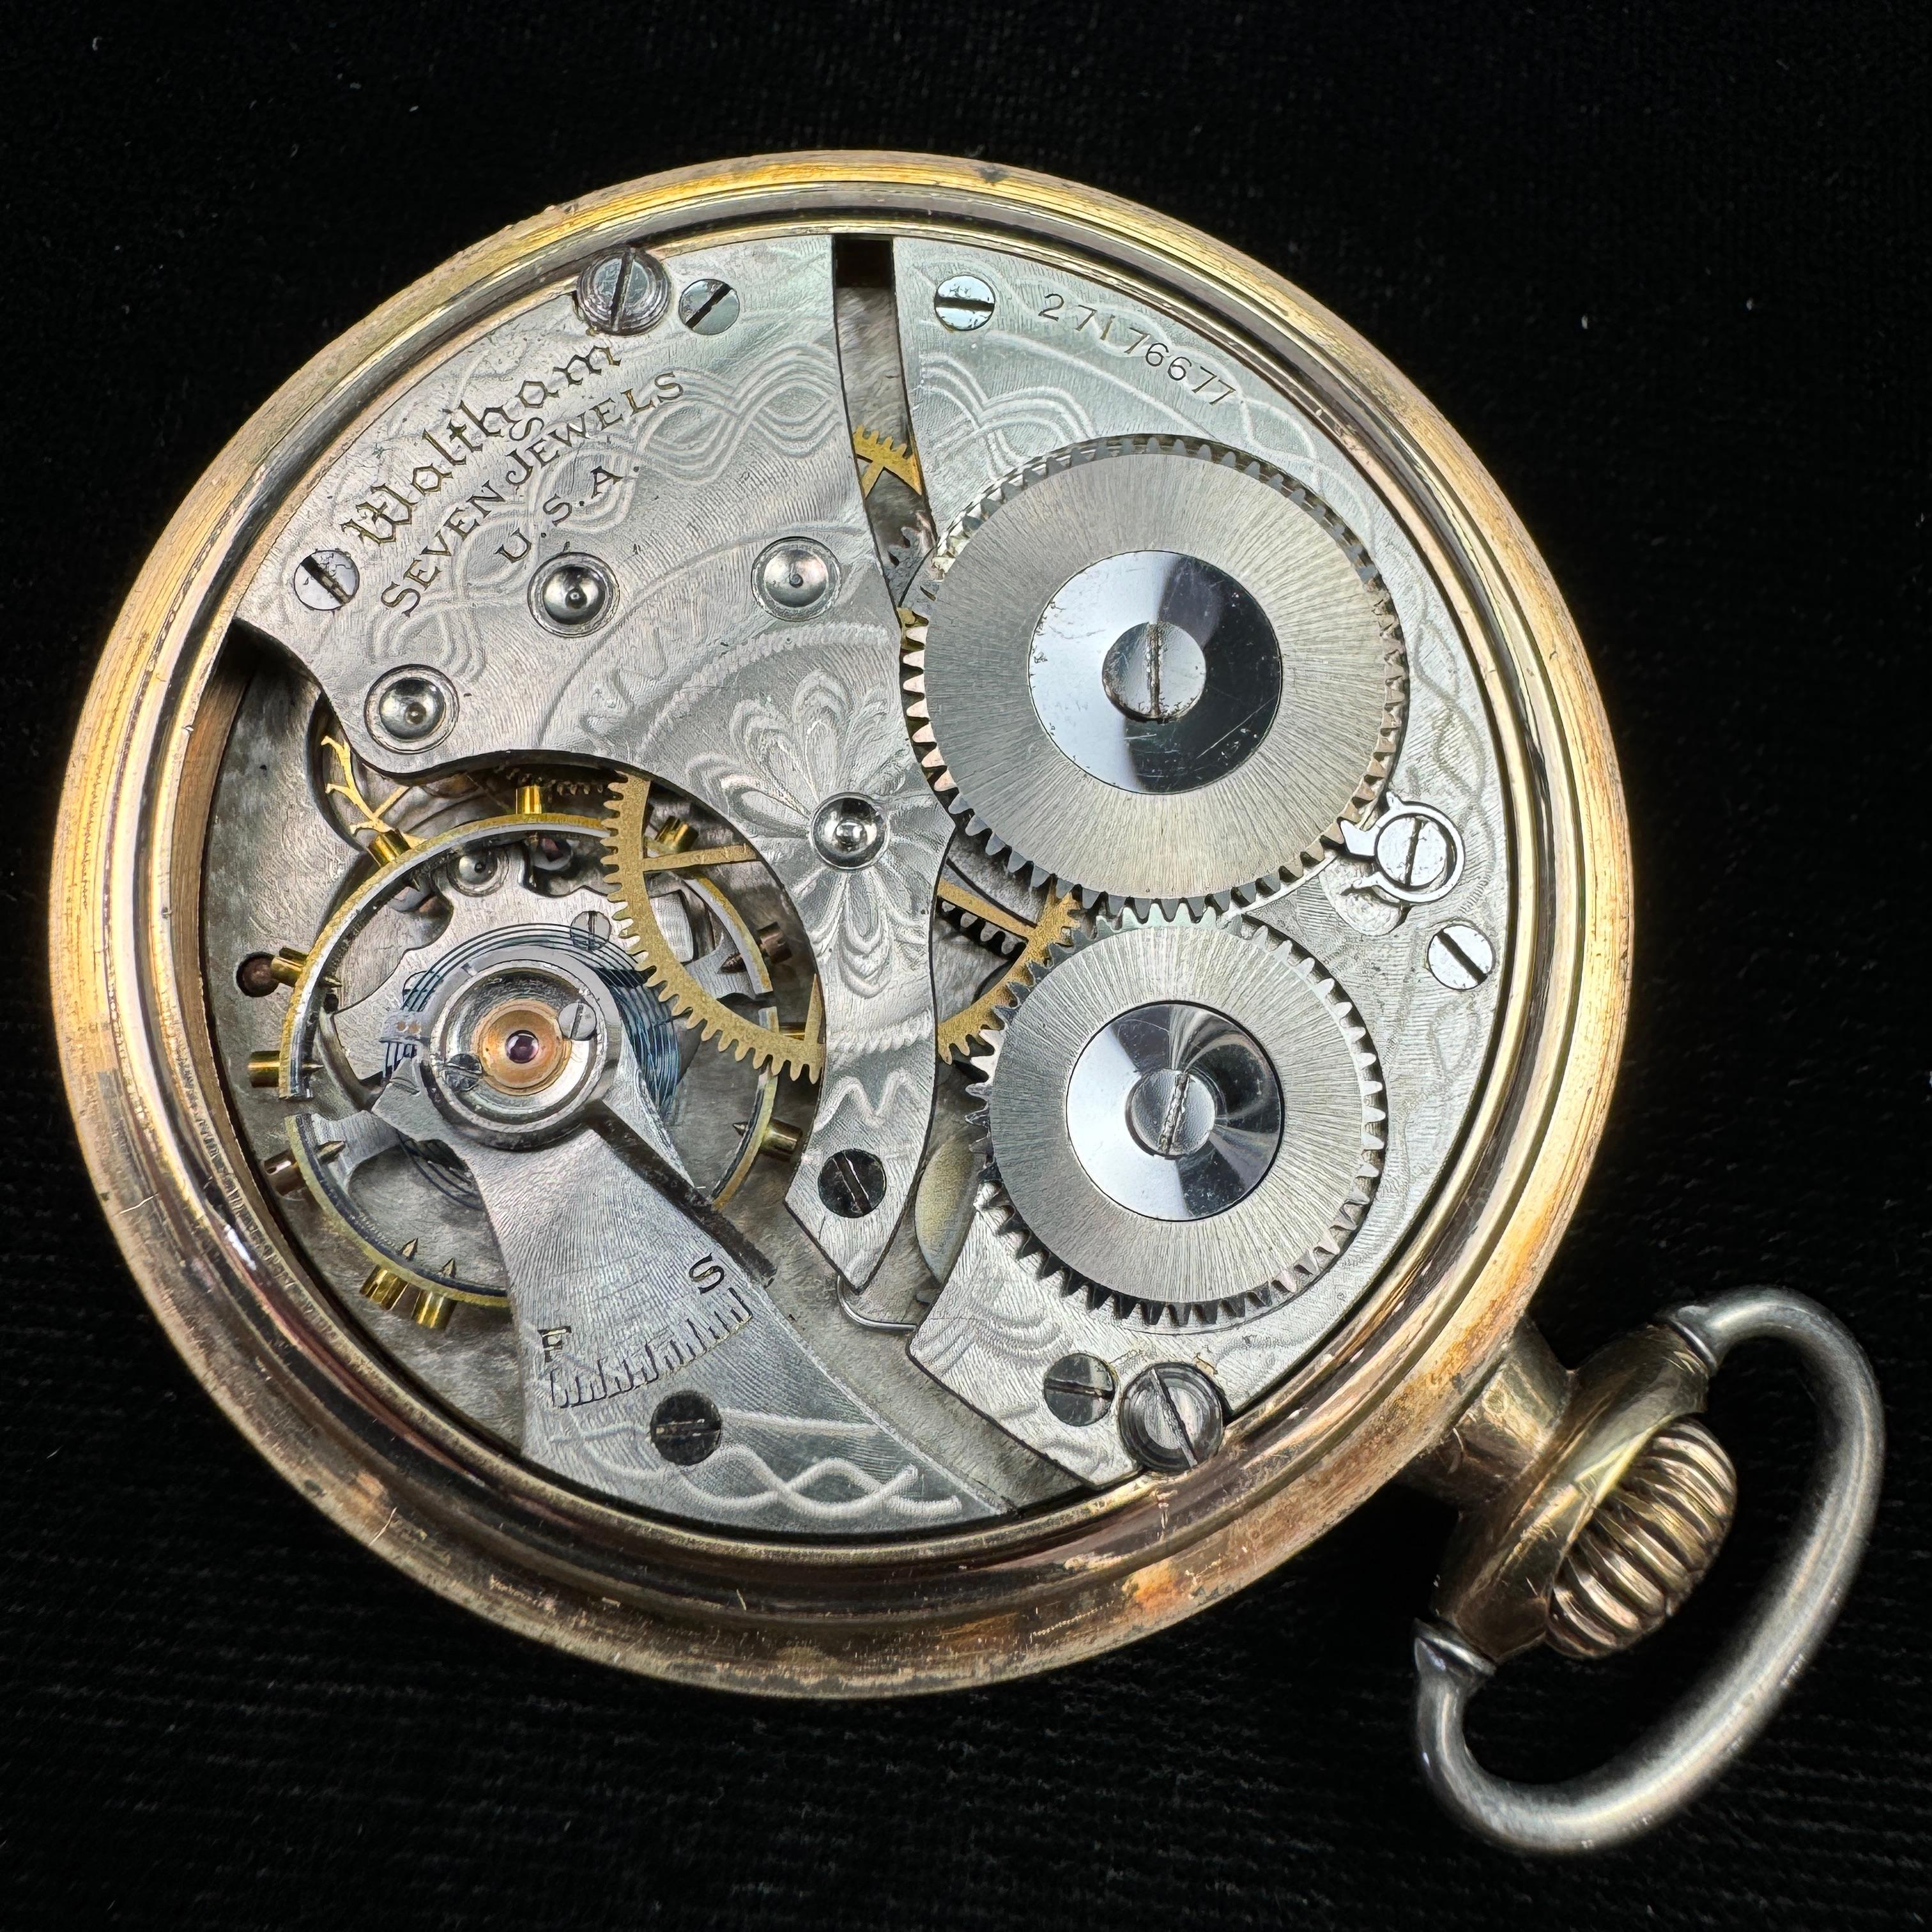 Circa 1930 7-jewel Waltham Model 1908 open face pocket watch